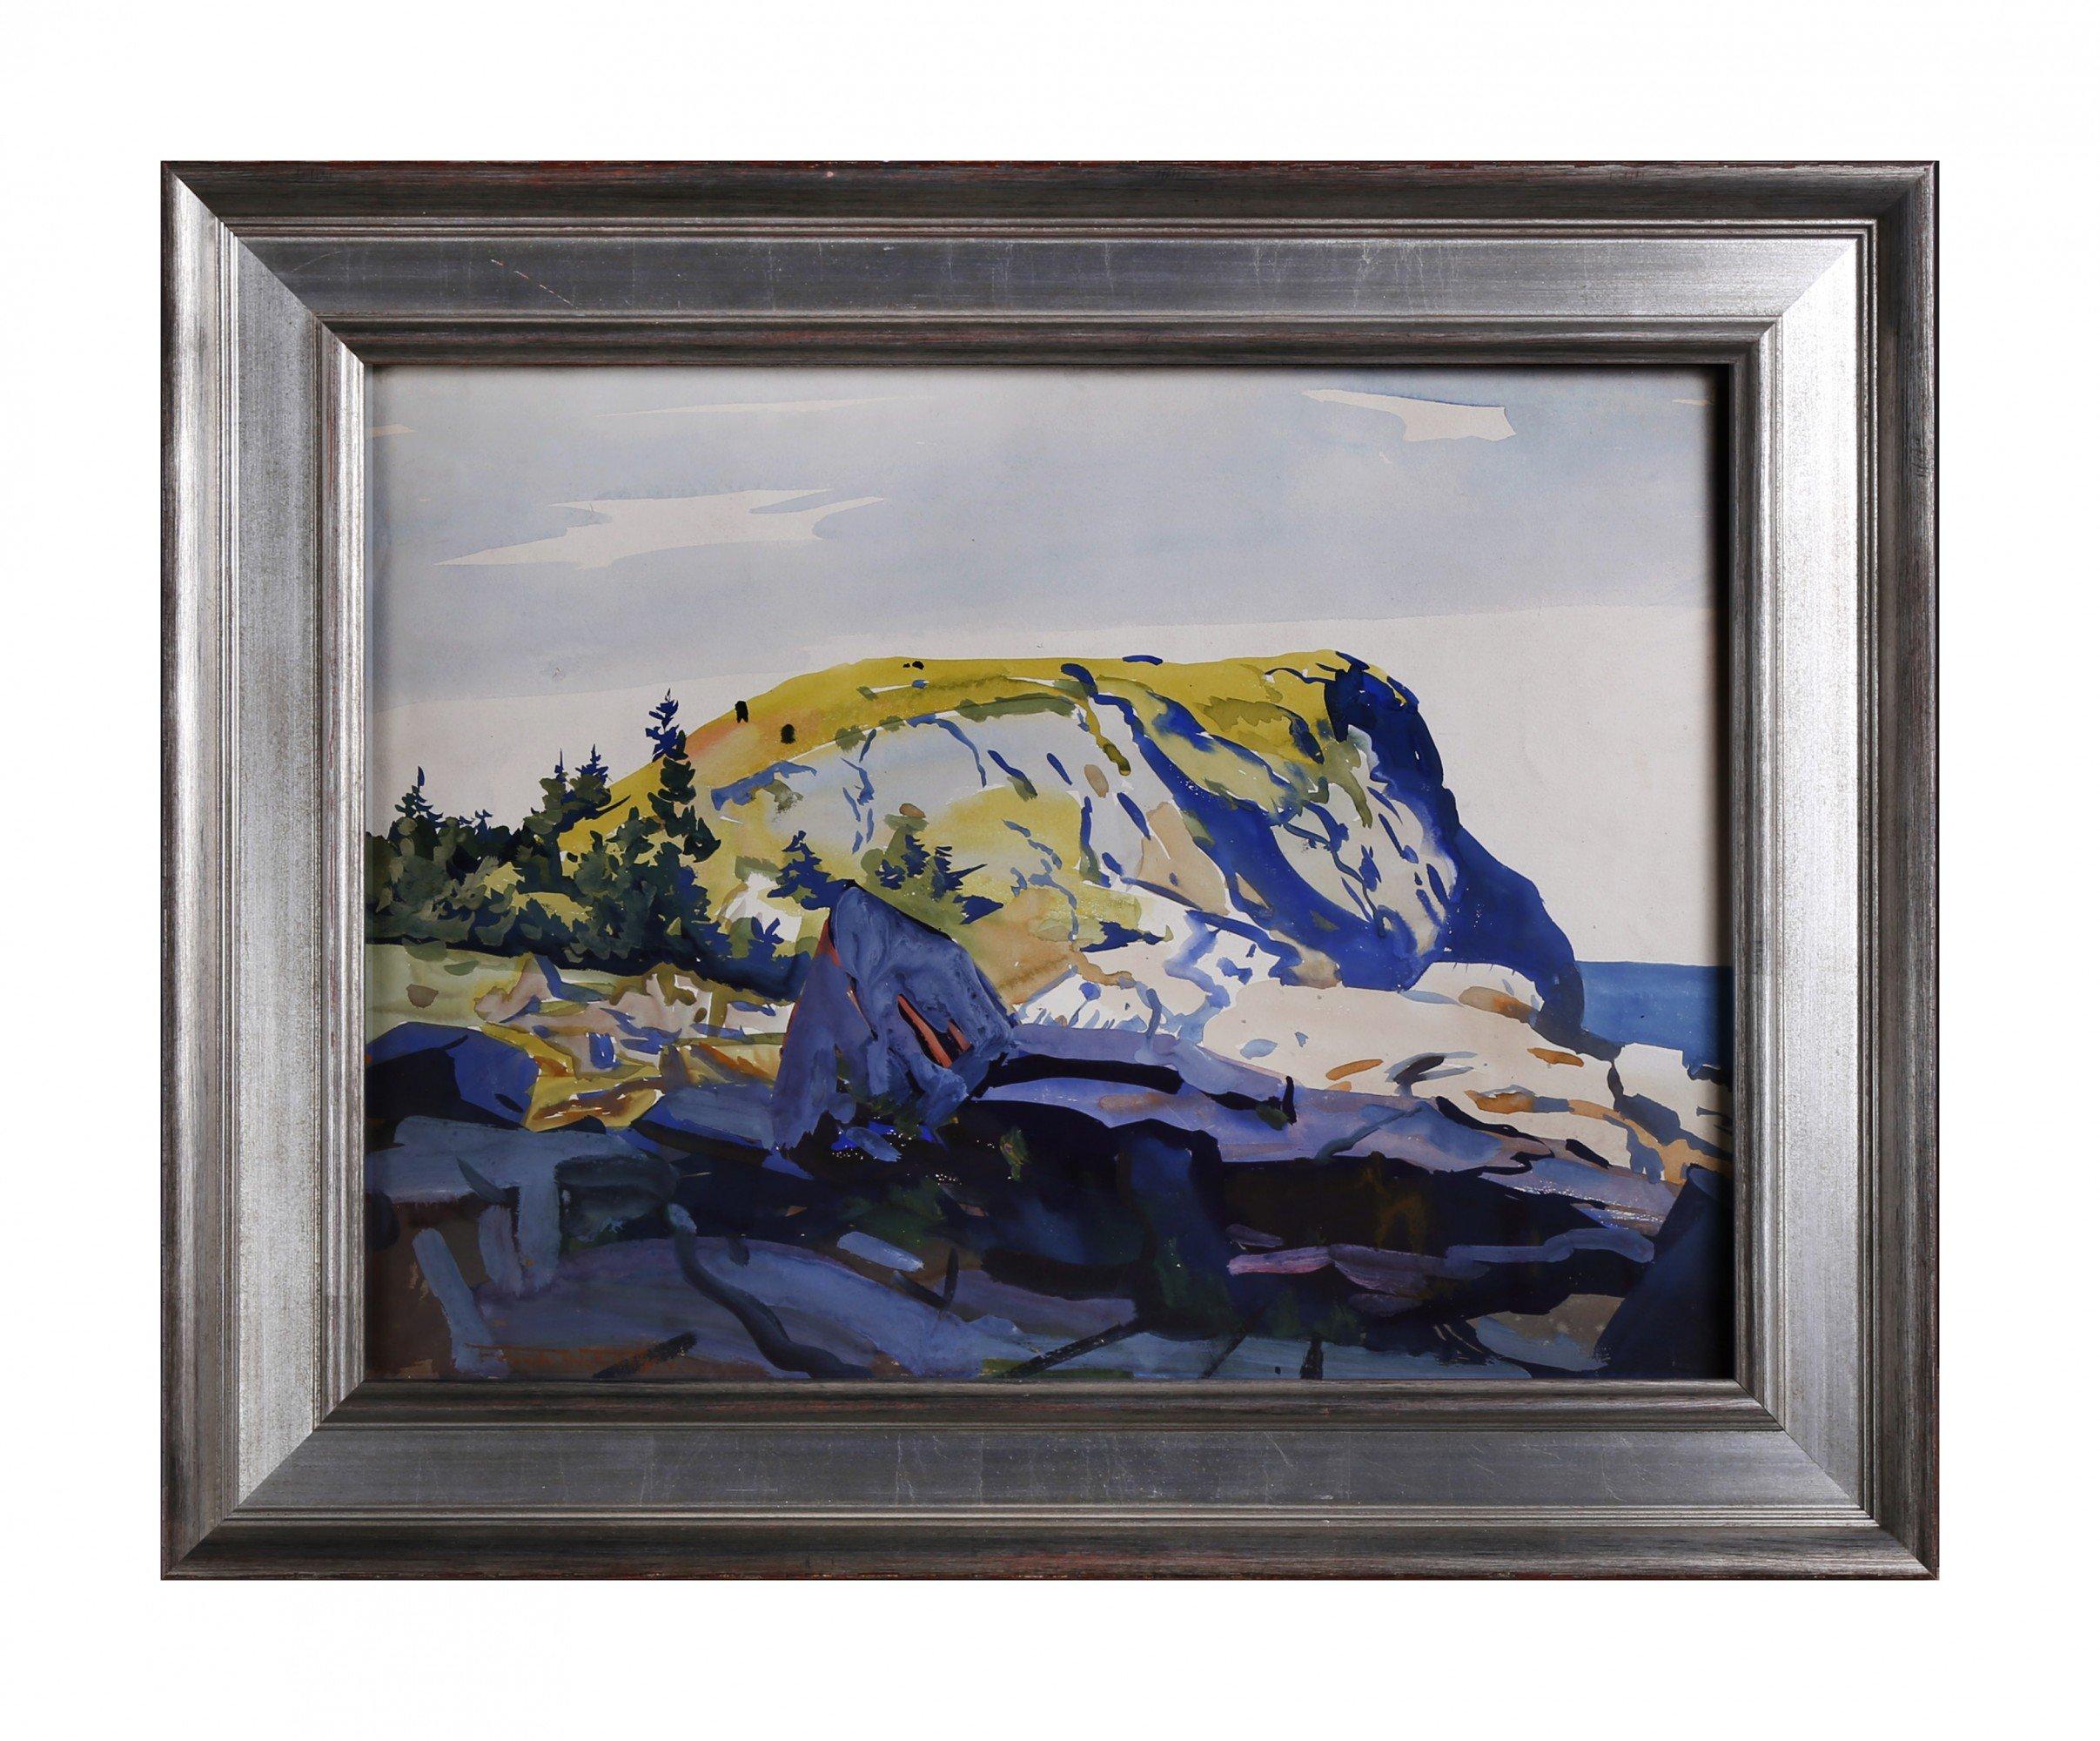 Headland & Rocks, White Island, Maine, early 20th century watercolor - Art by Frank Wilcox